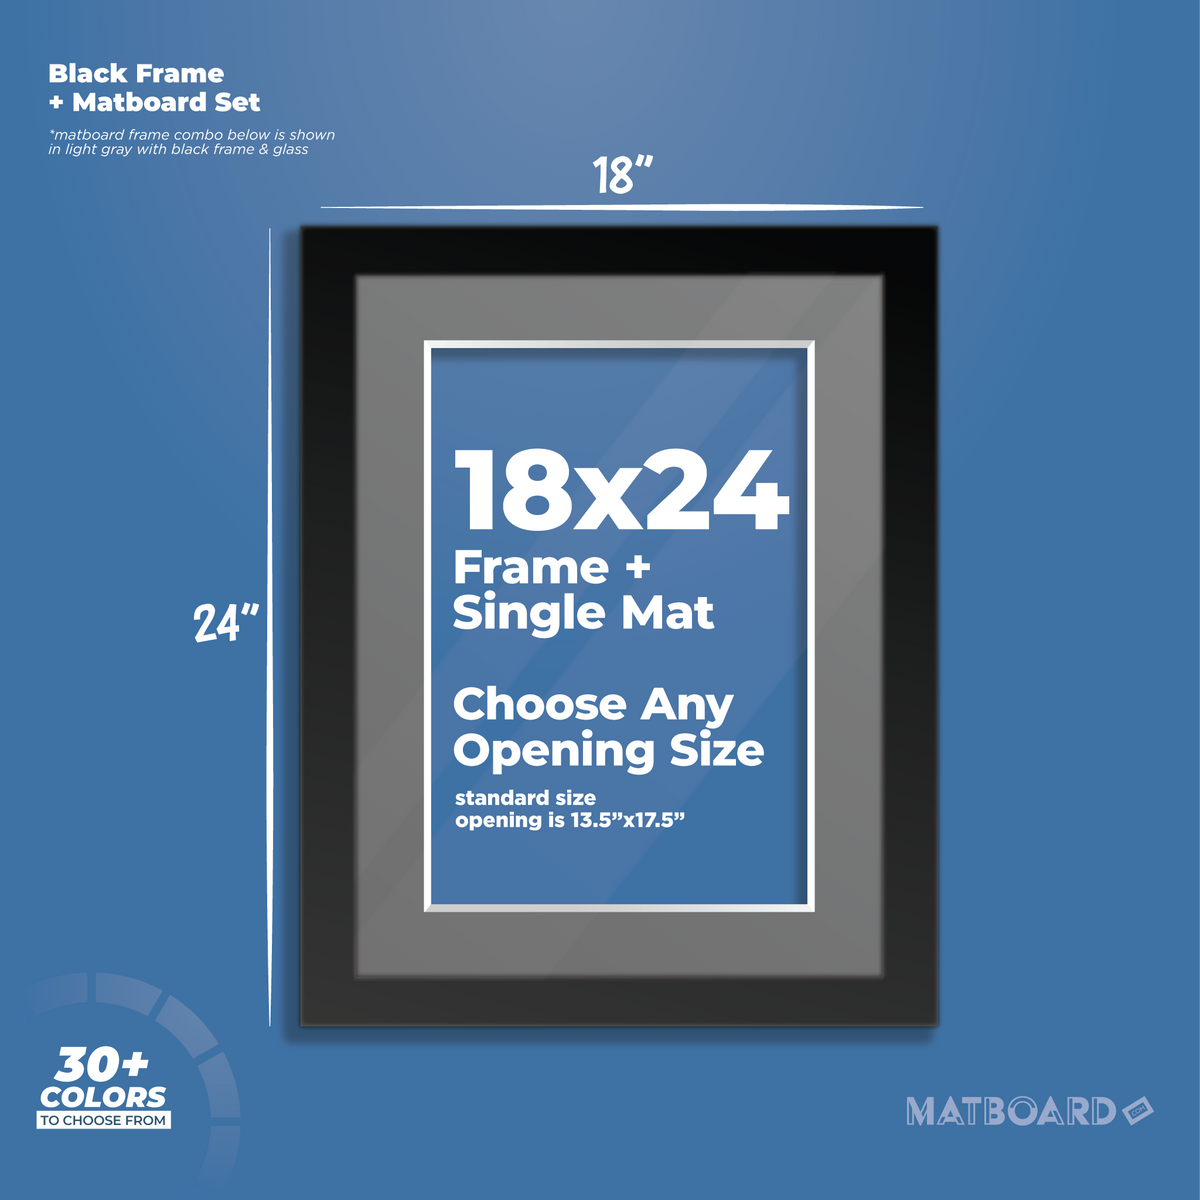 18x24 Frame + Single Mat – Matboarddotcom